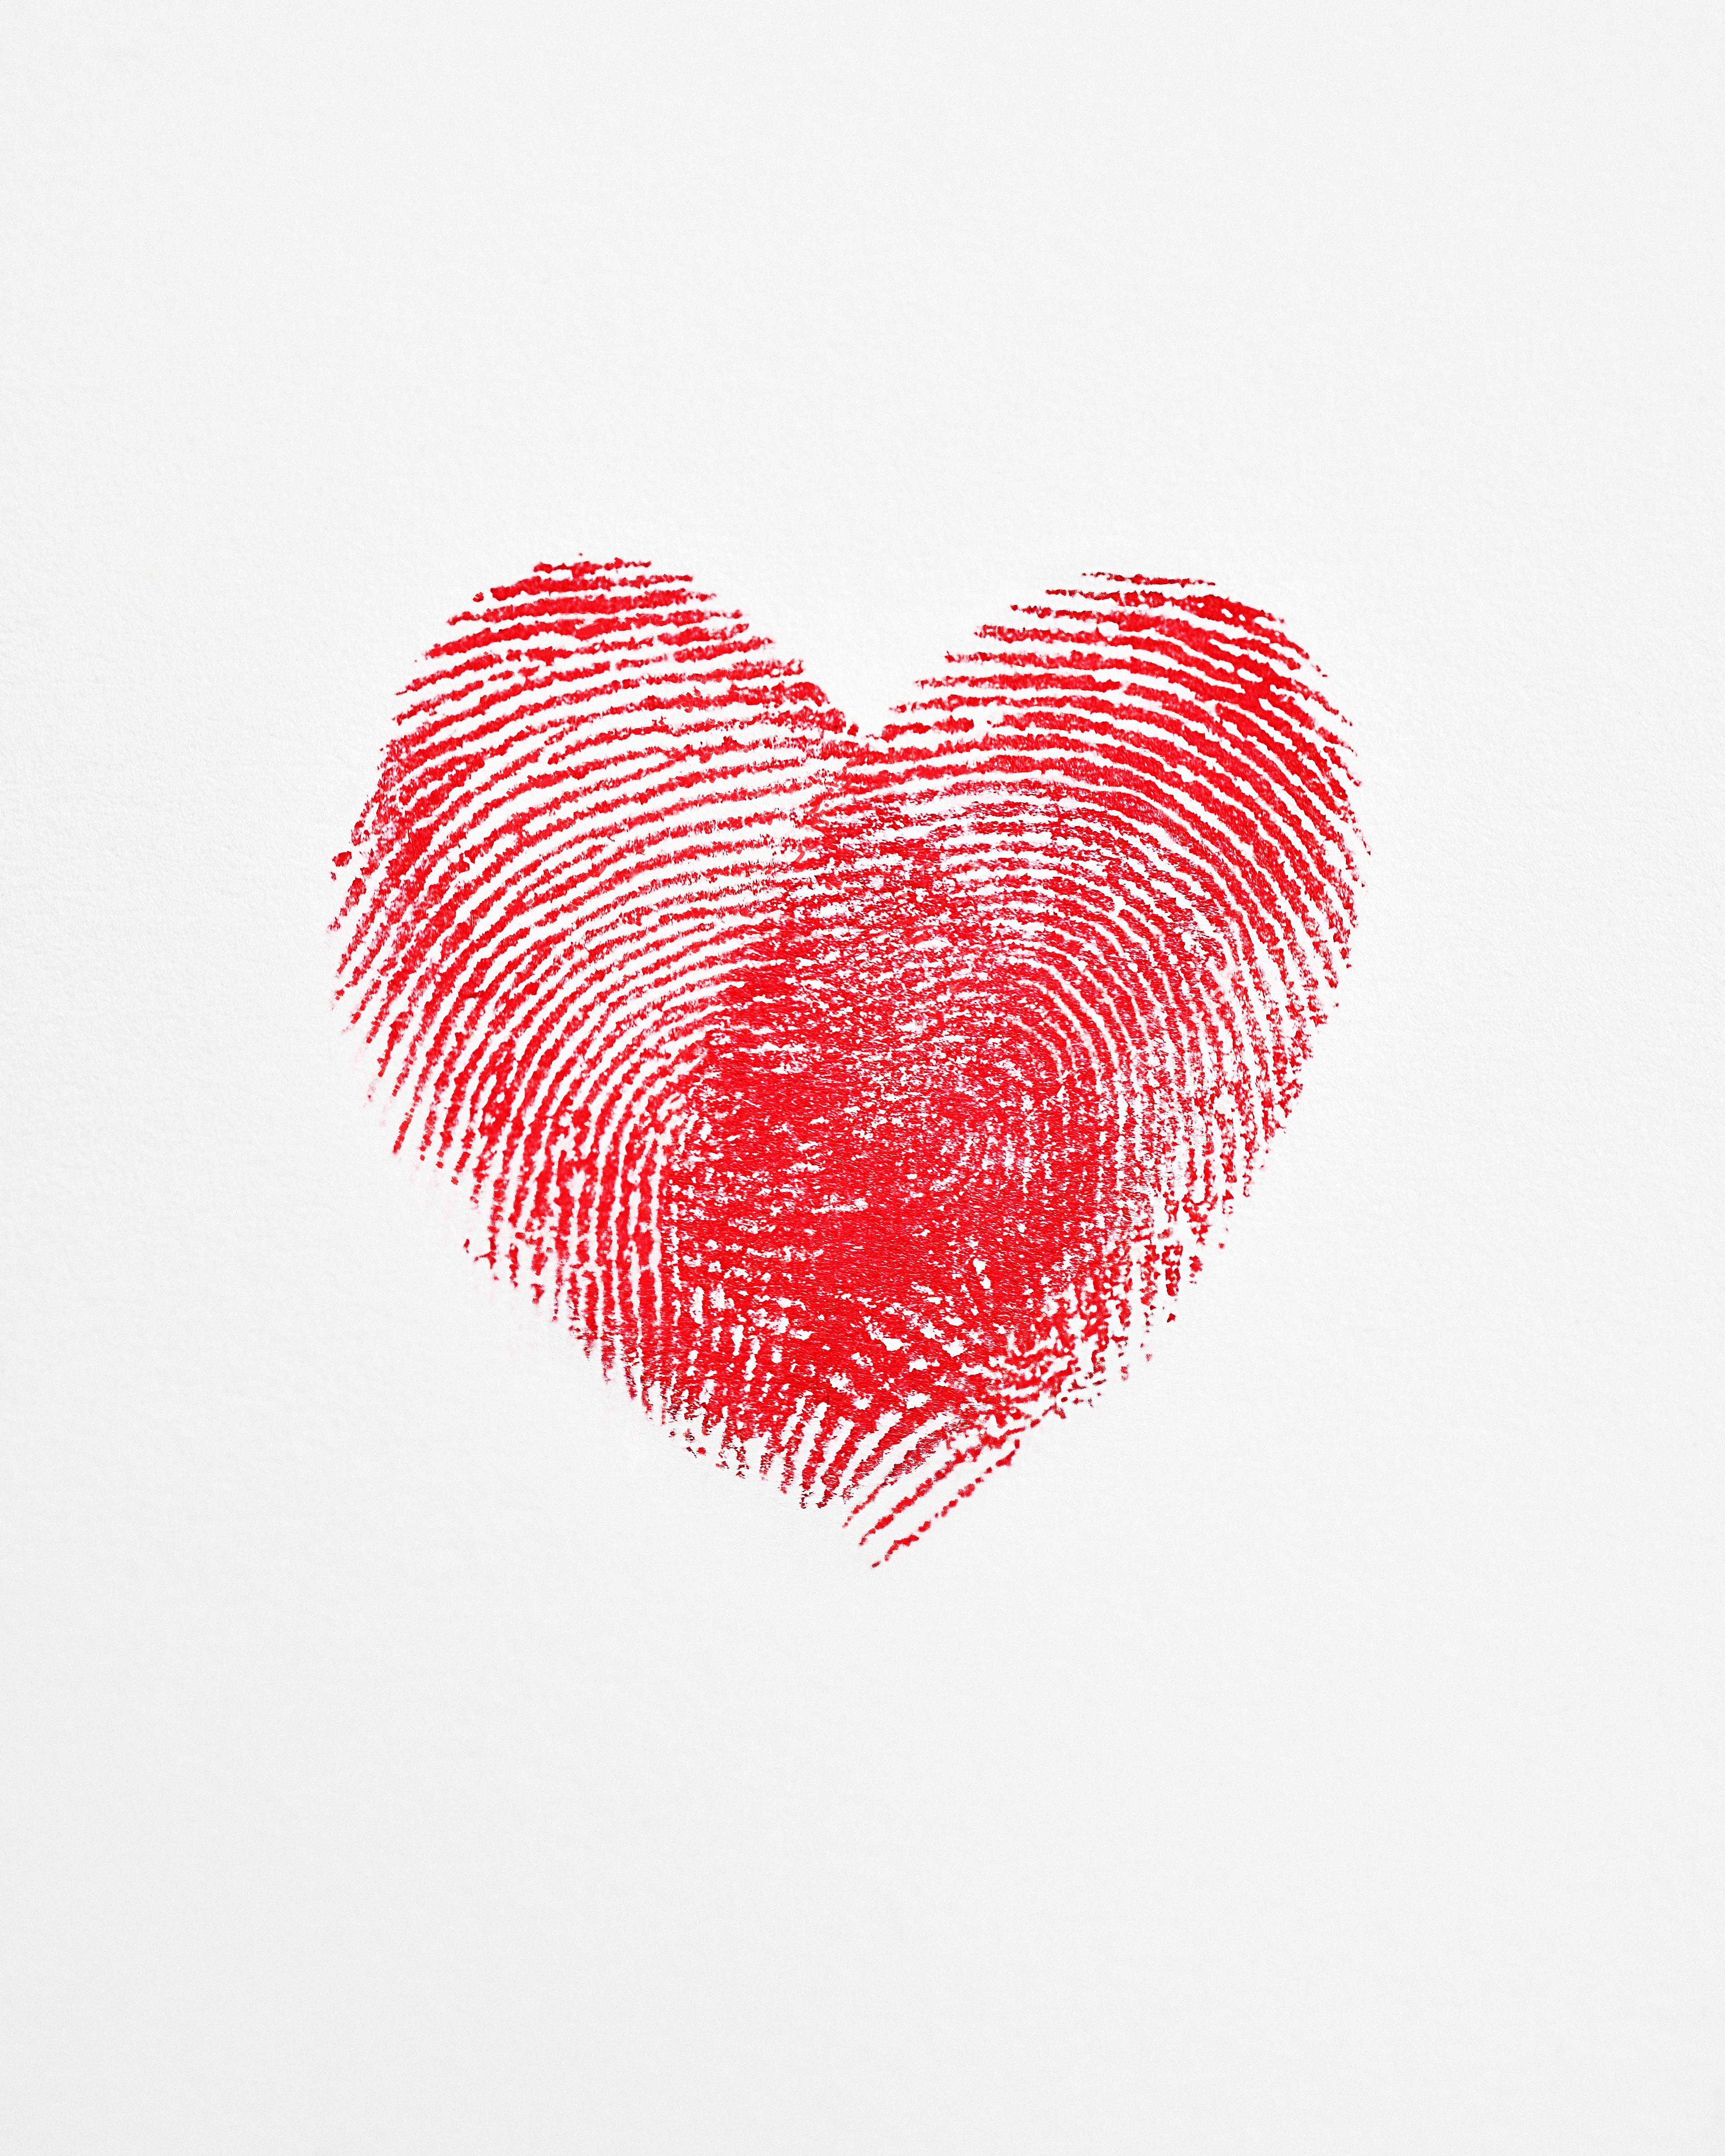 Overlapping fingerprints forming a heart shape